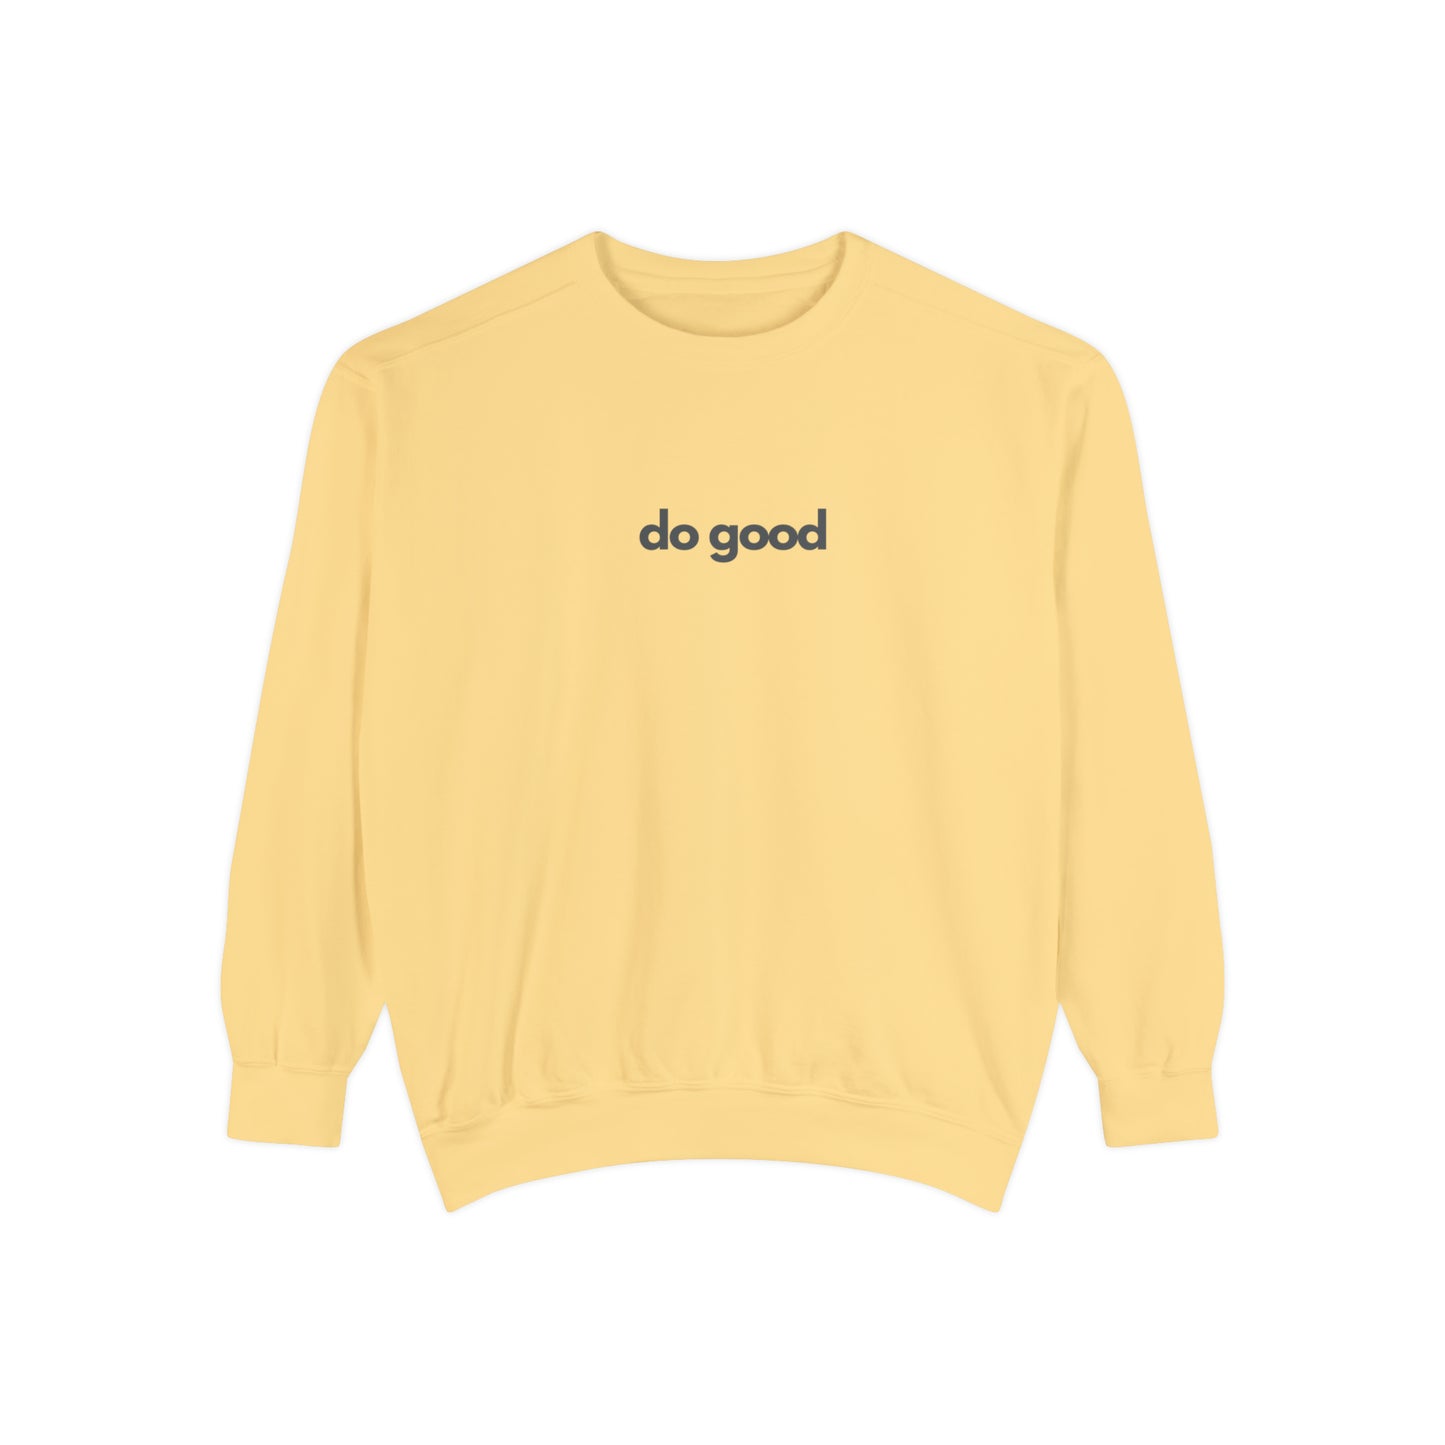 Women's 'do good' Garment-Dyed Sweatshirt